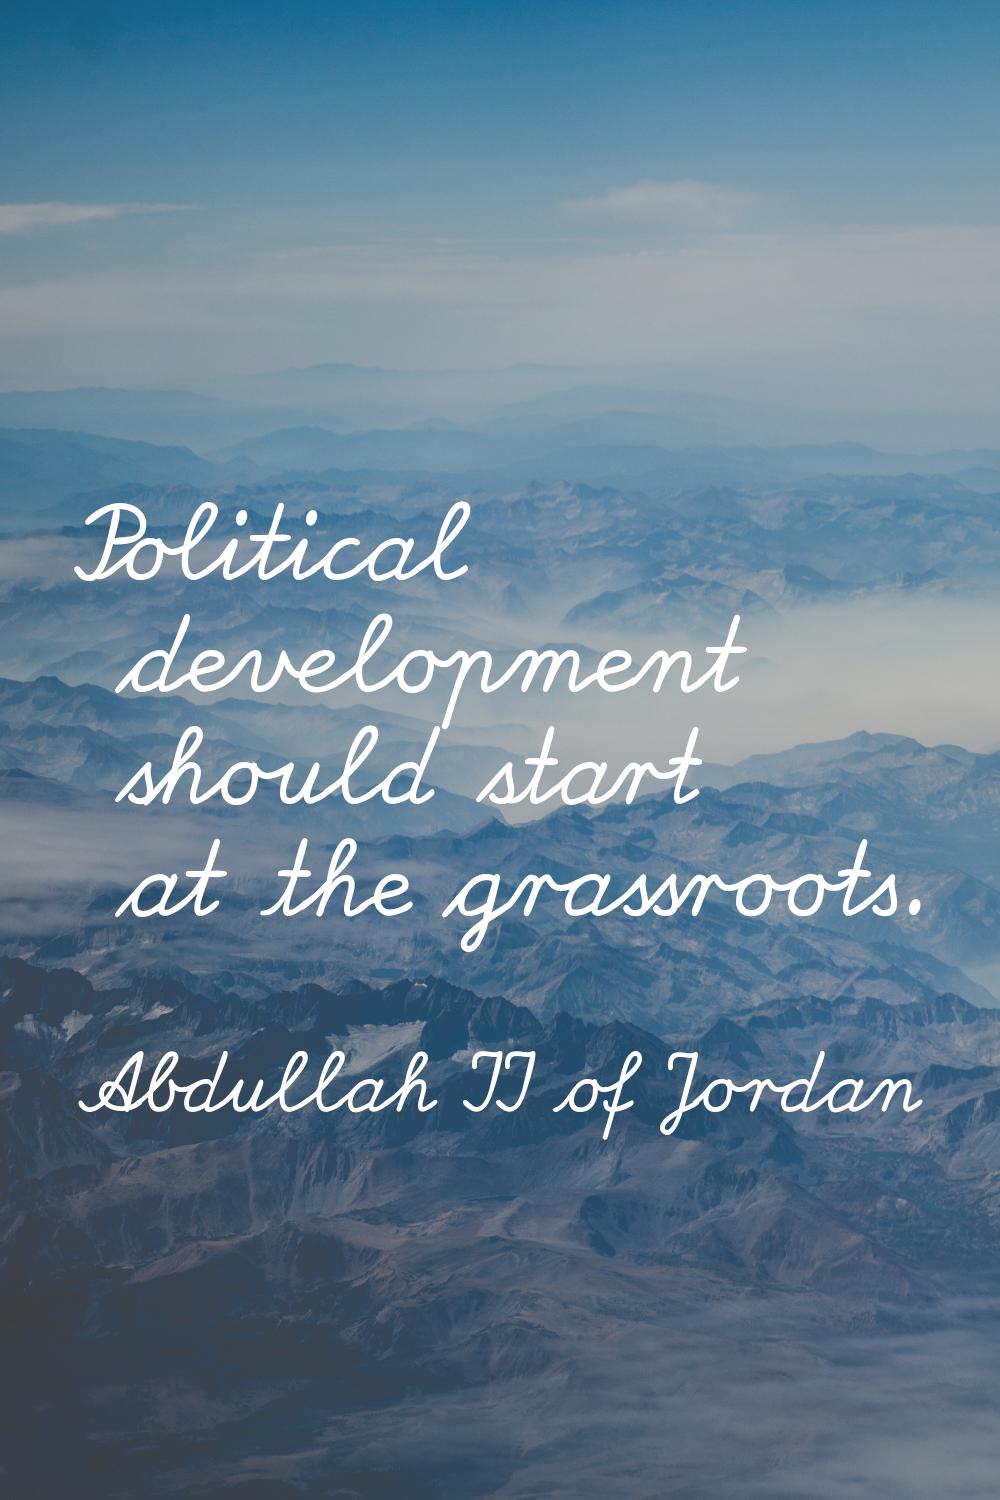 Political development should start at the grassroots.